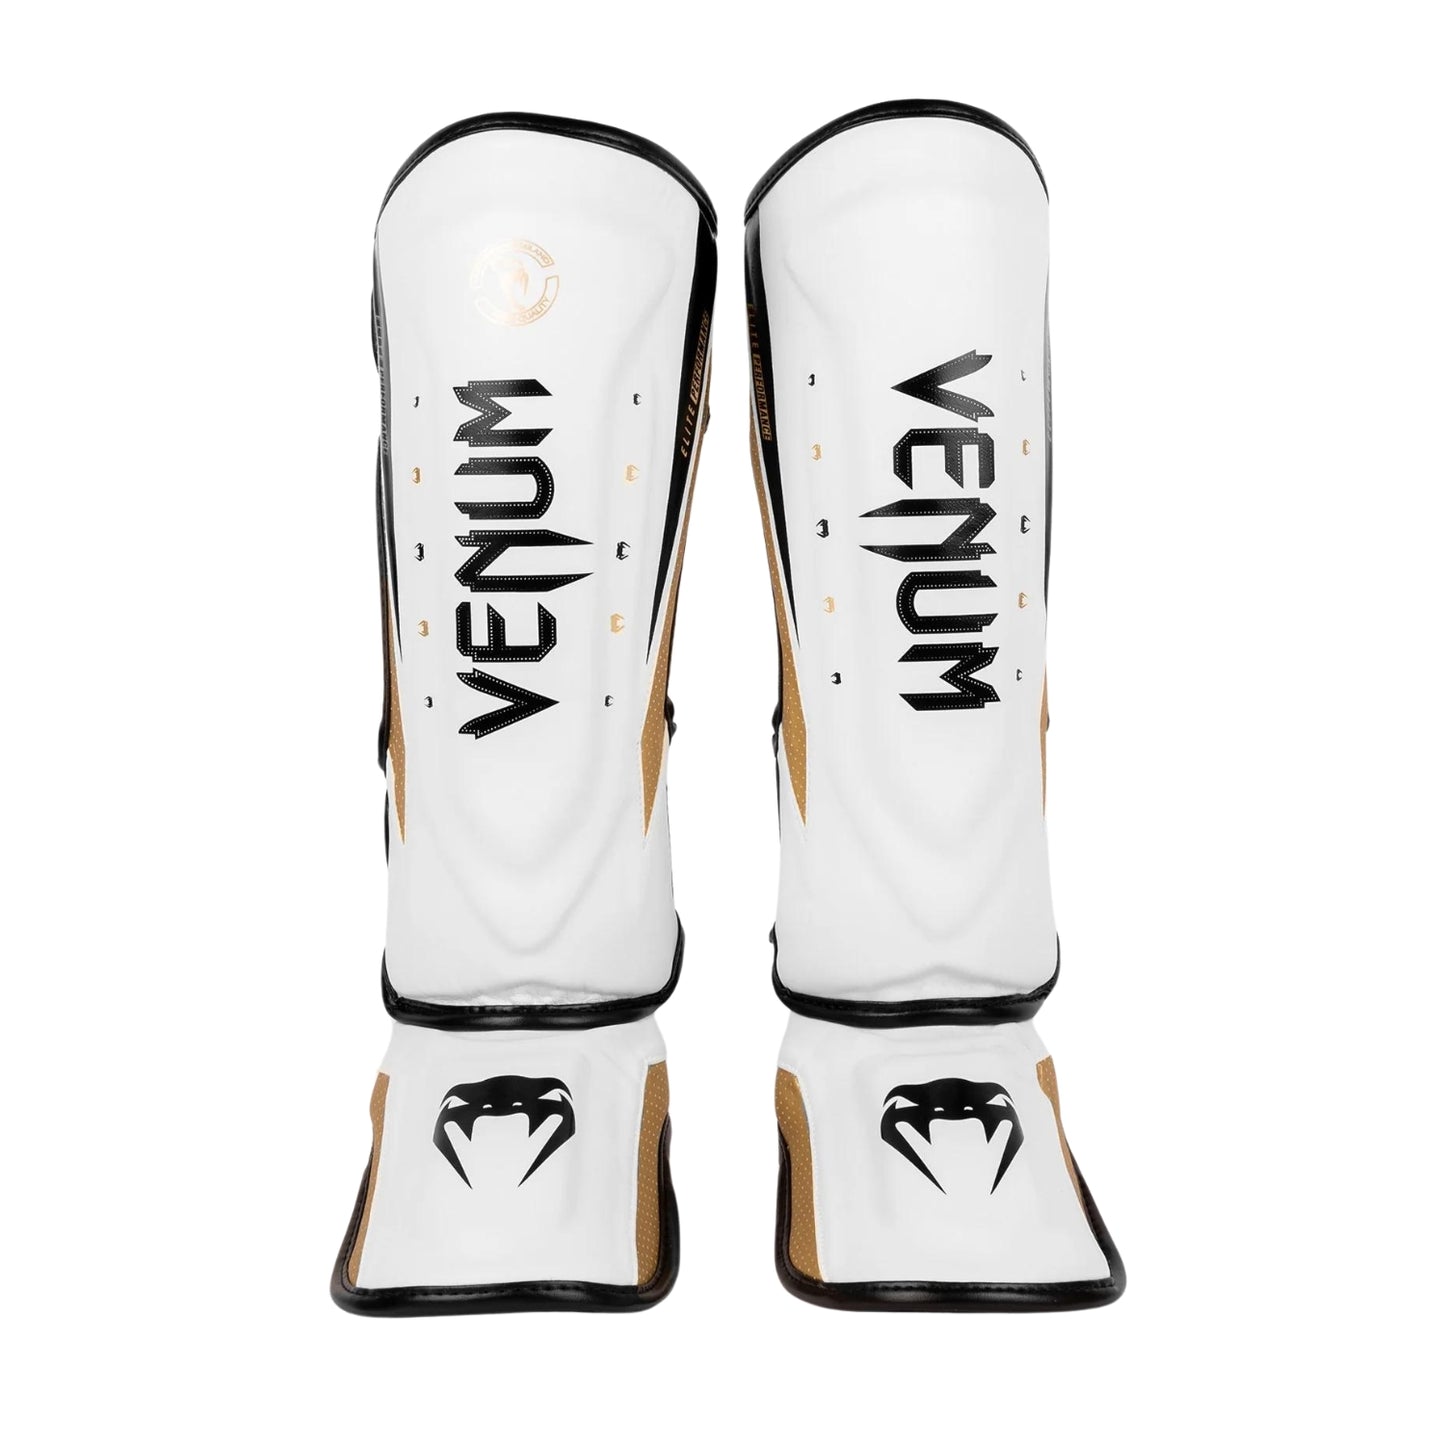 Venum Elite 2.0 Standup Shinguards, White/Gold - Best Price online Prokicksports.com